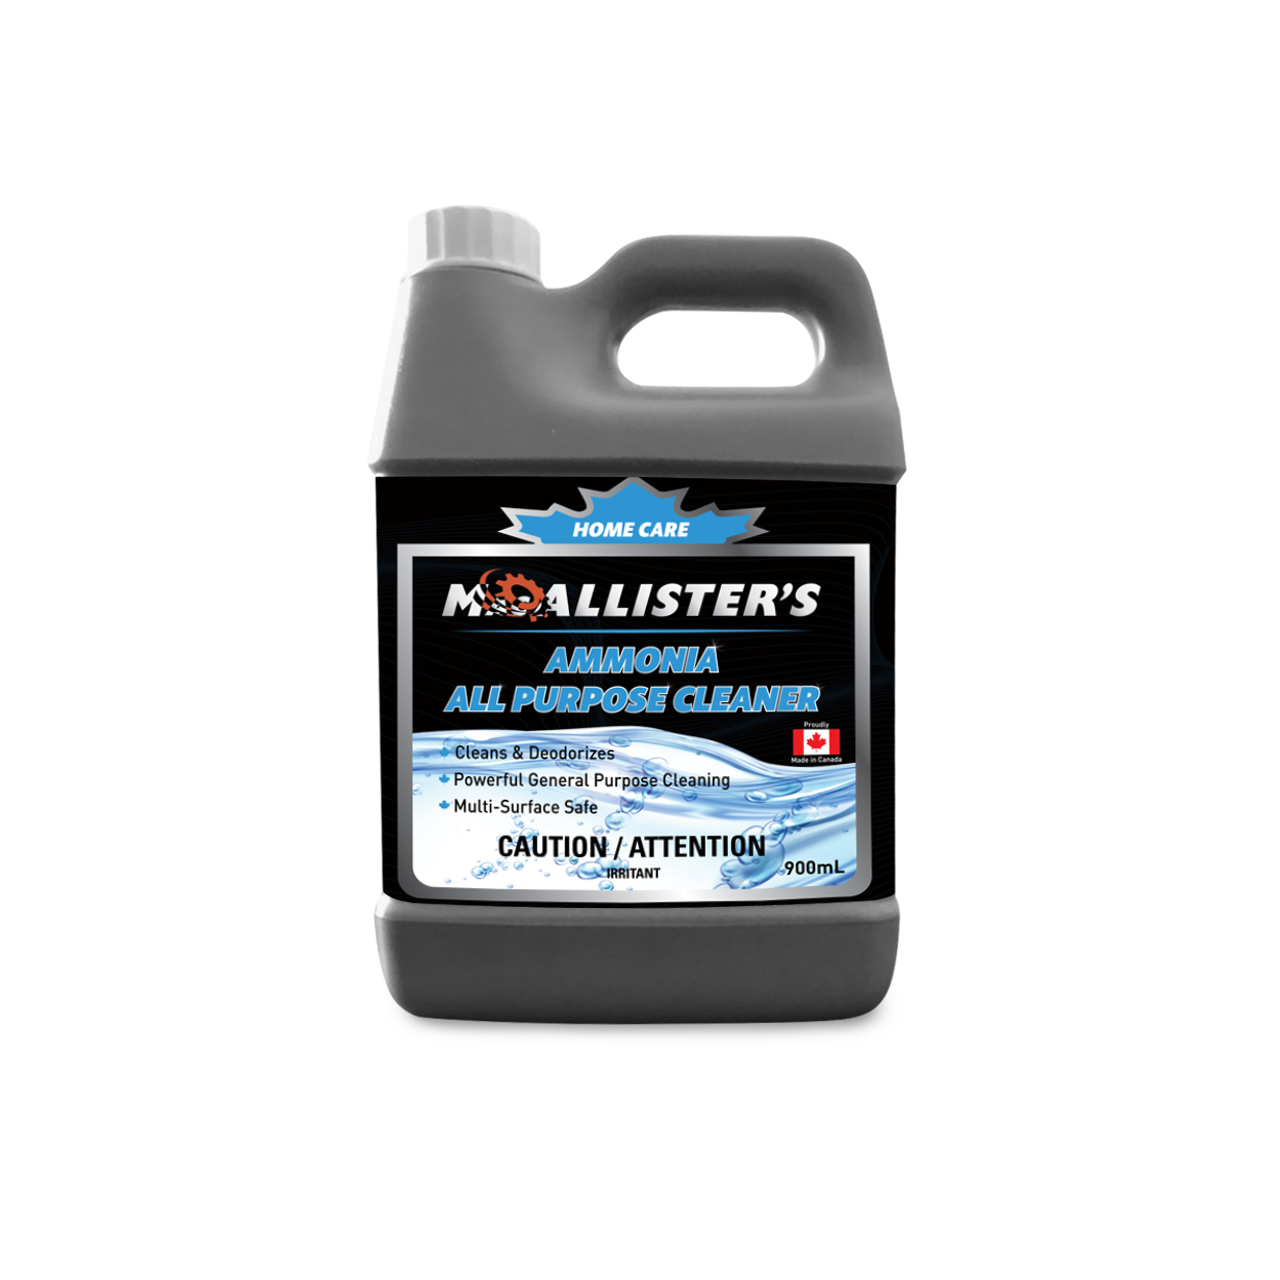 MacAllister's Ammonia All Purpose Cleaner